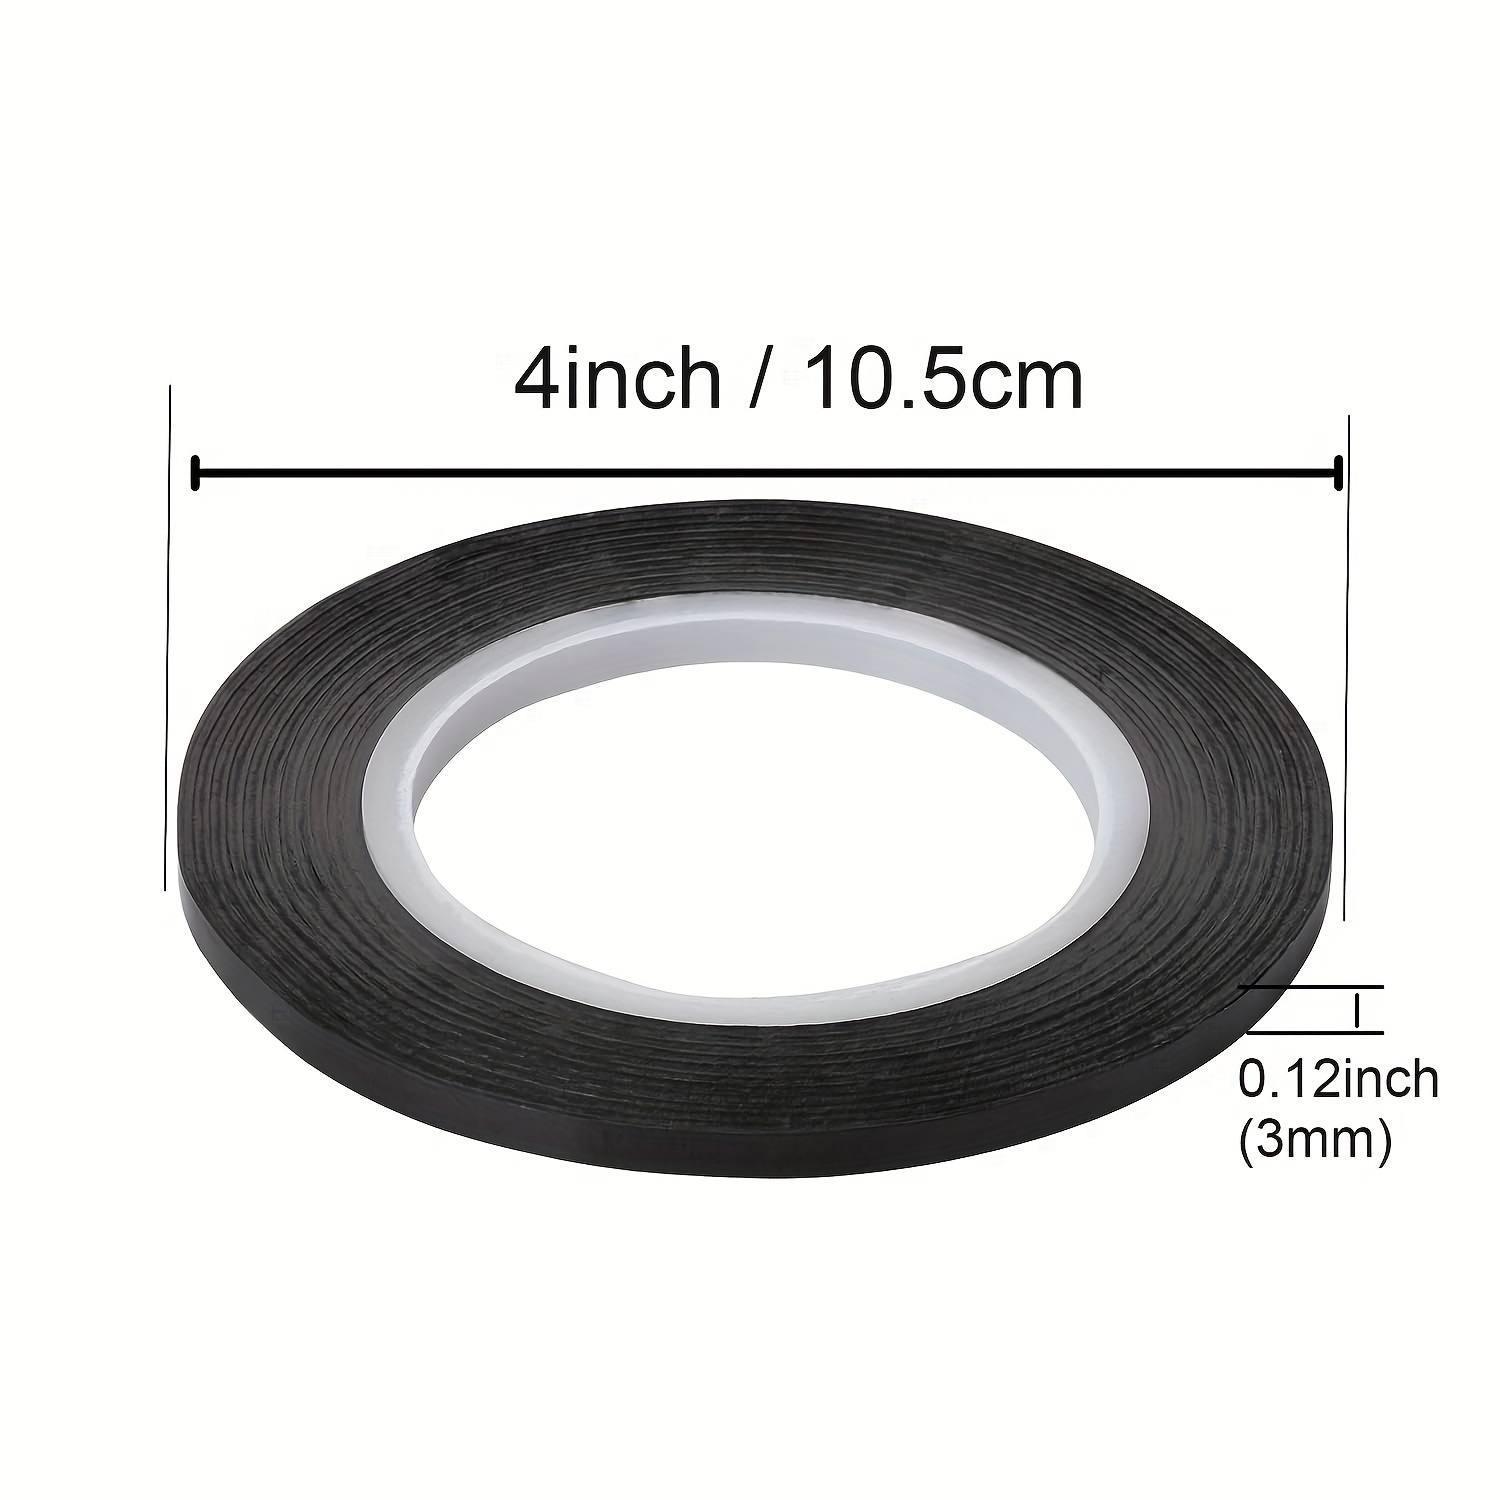 10 PCS Whiteboard Vinyl Tape Black Gaffers Adhesive Pinstriping